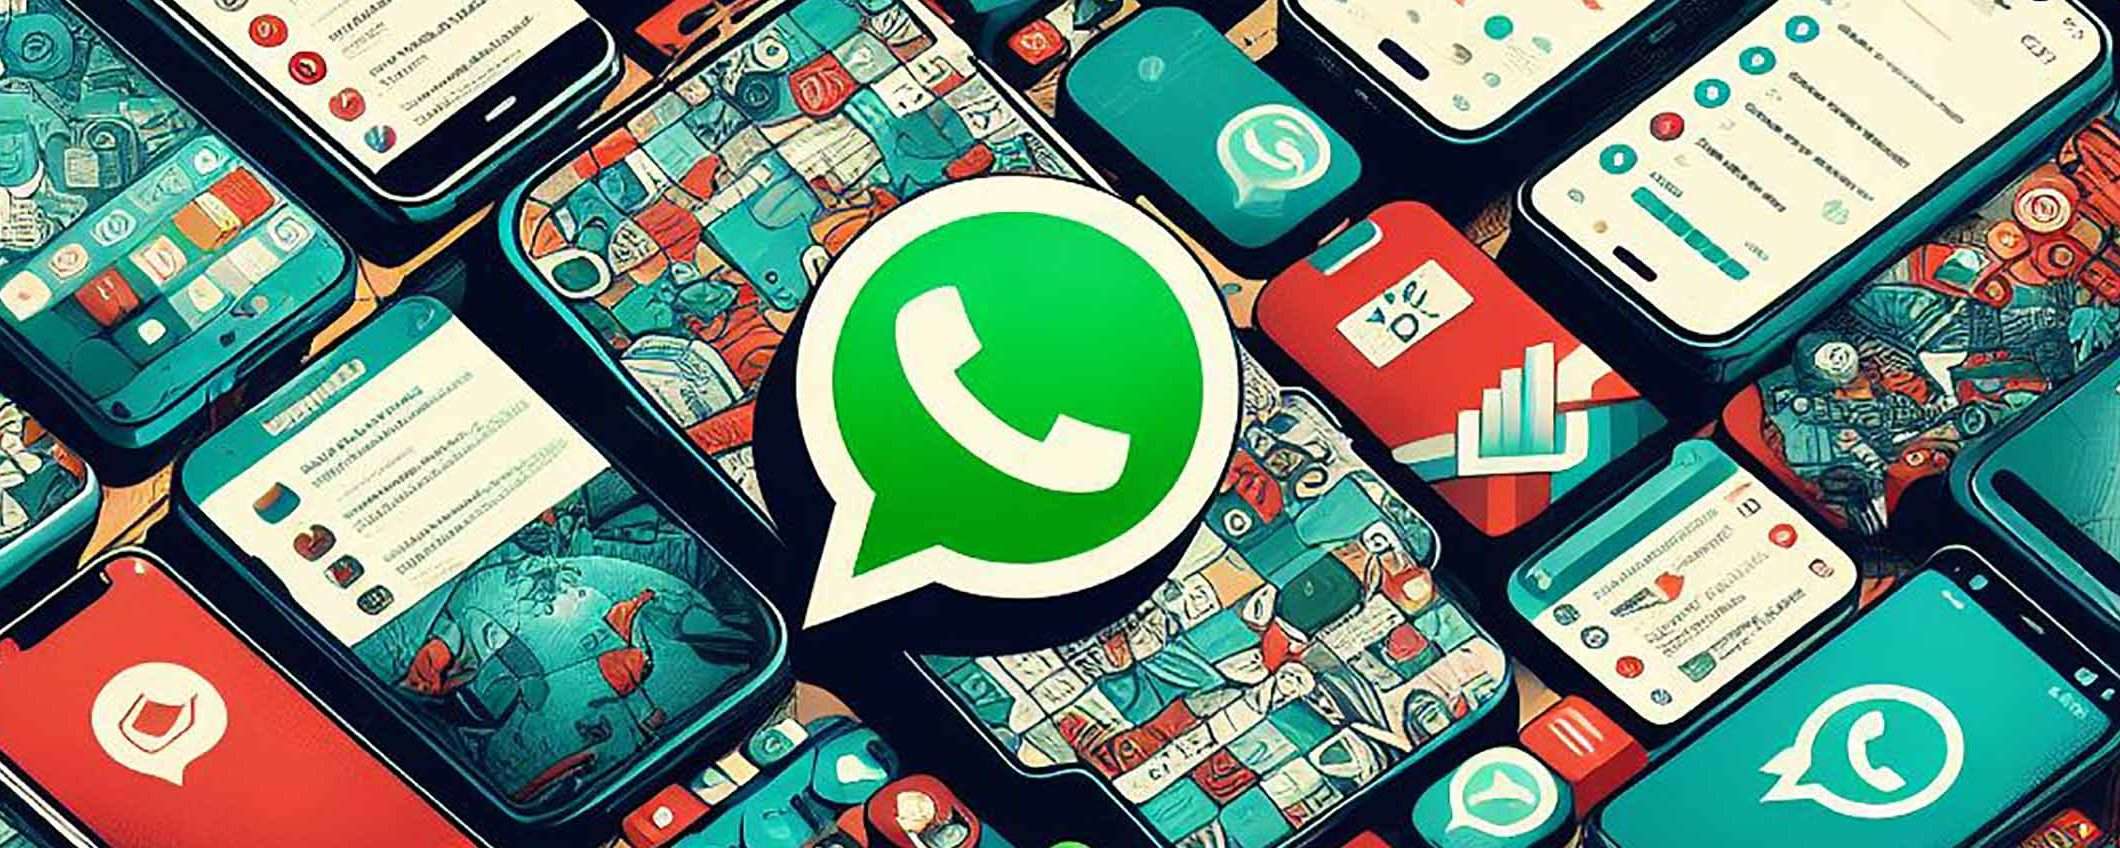 WhatsApp: sondaggi e messaggi vocali nei Canali